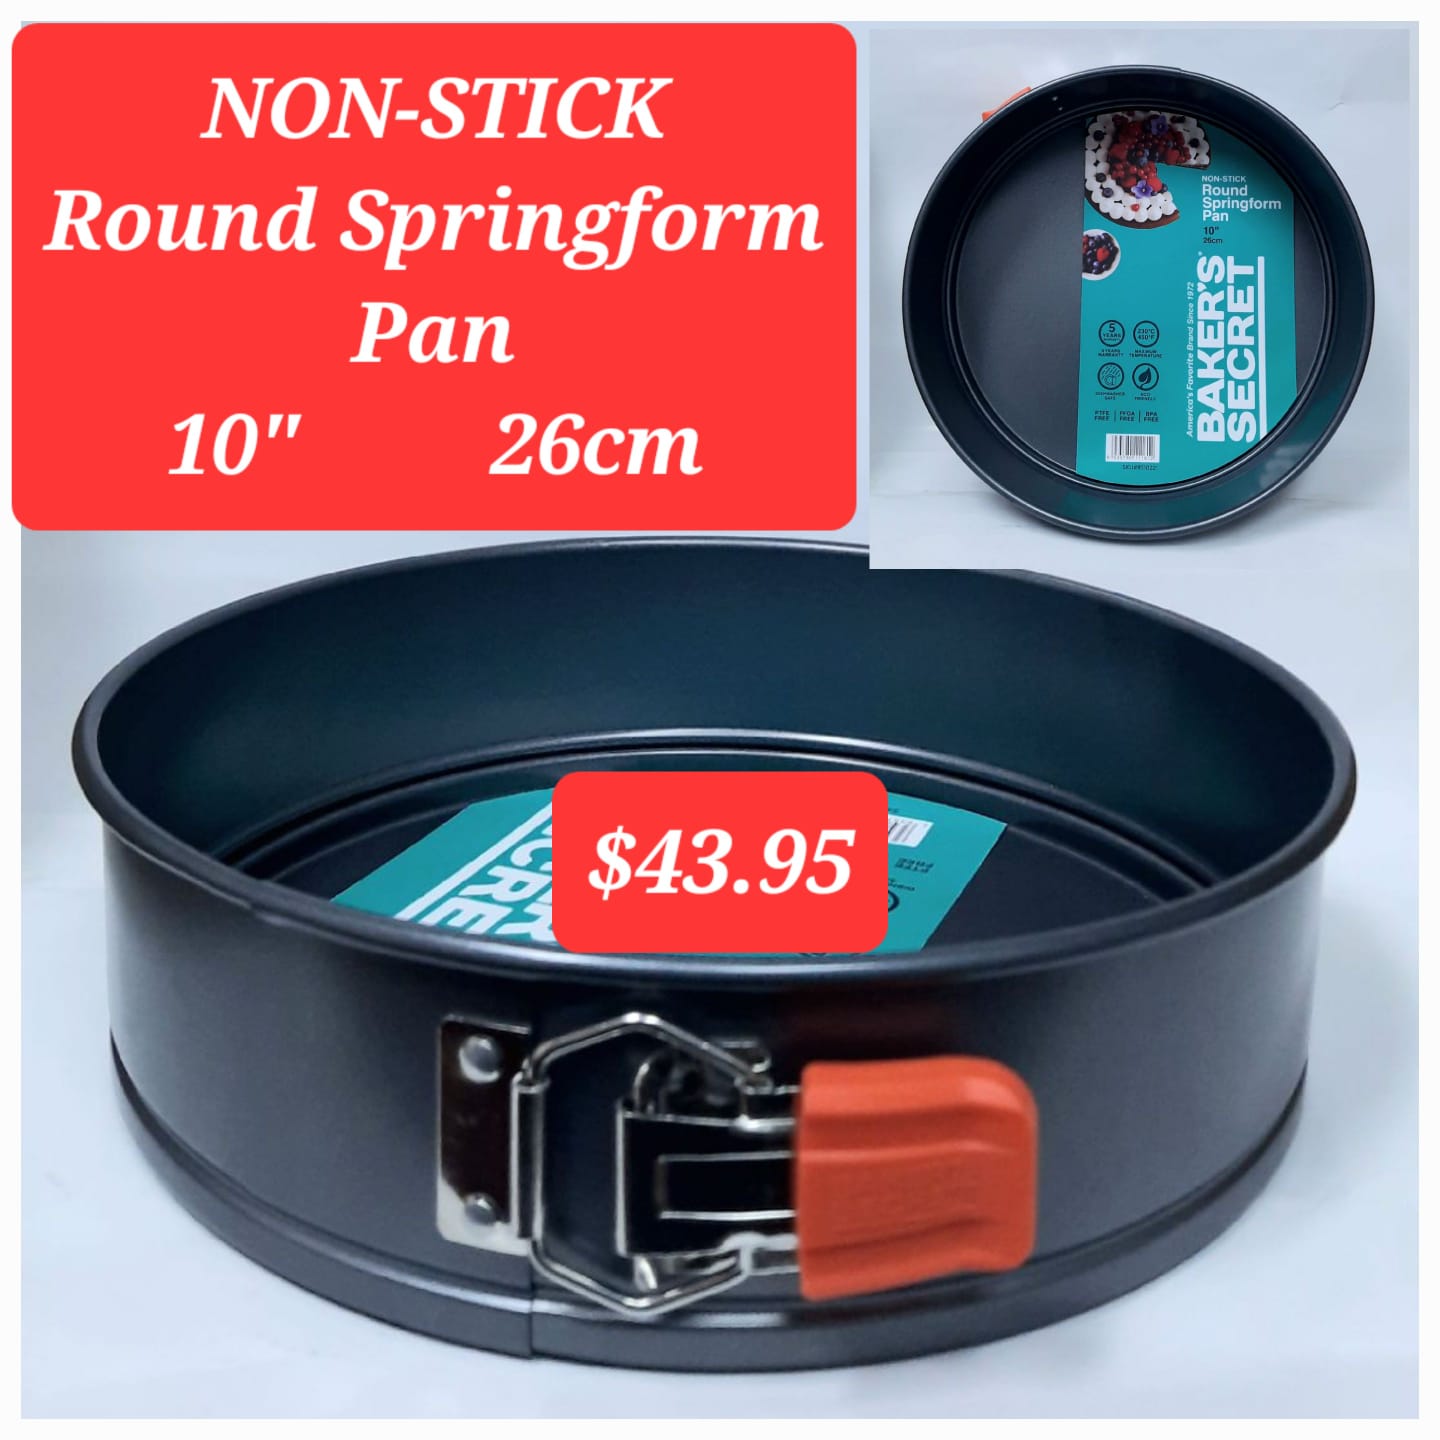 Non-stick round springform pan